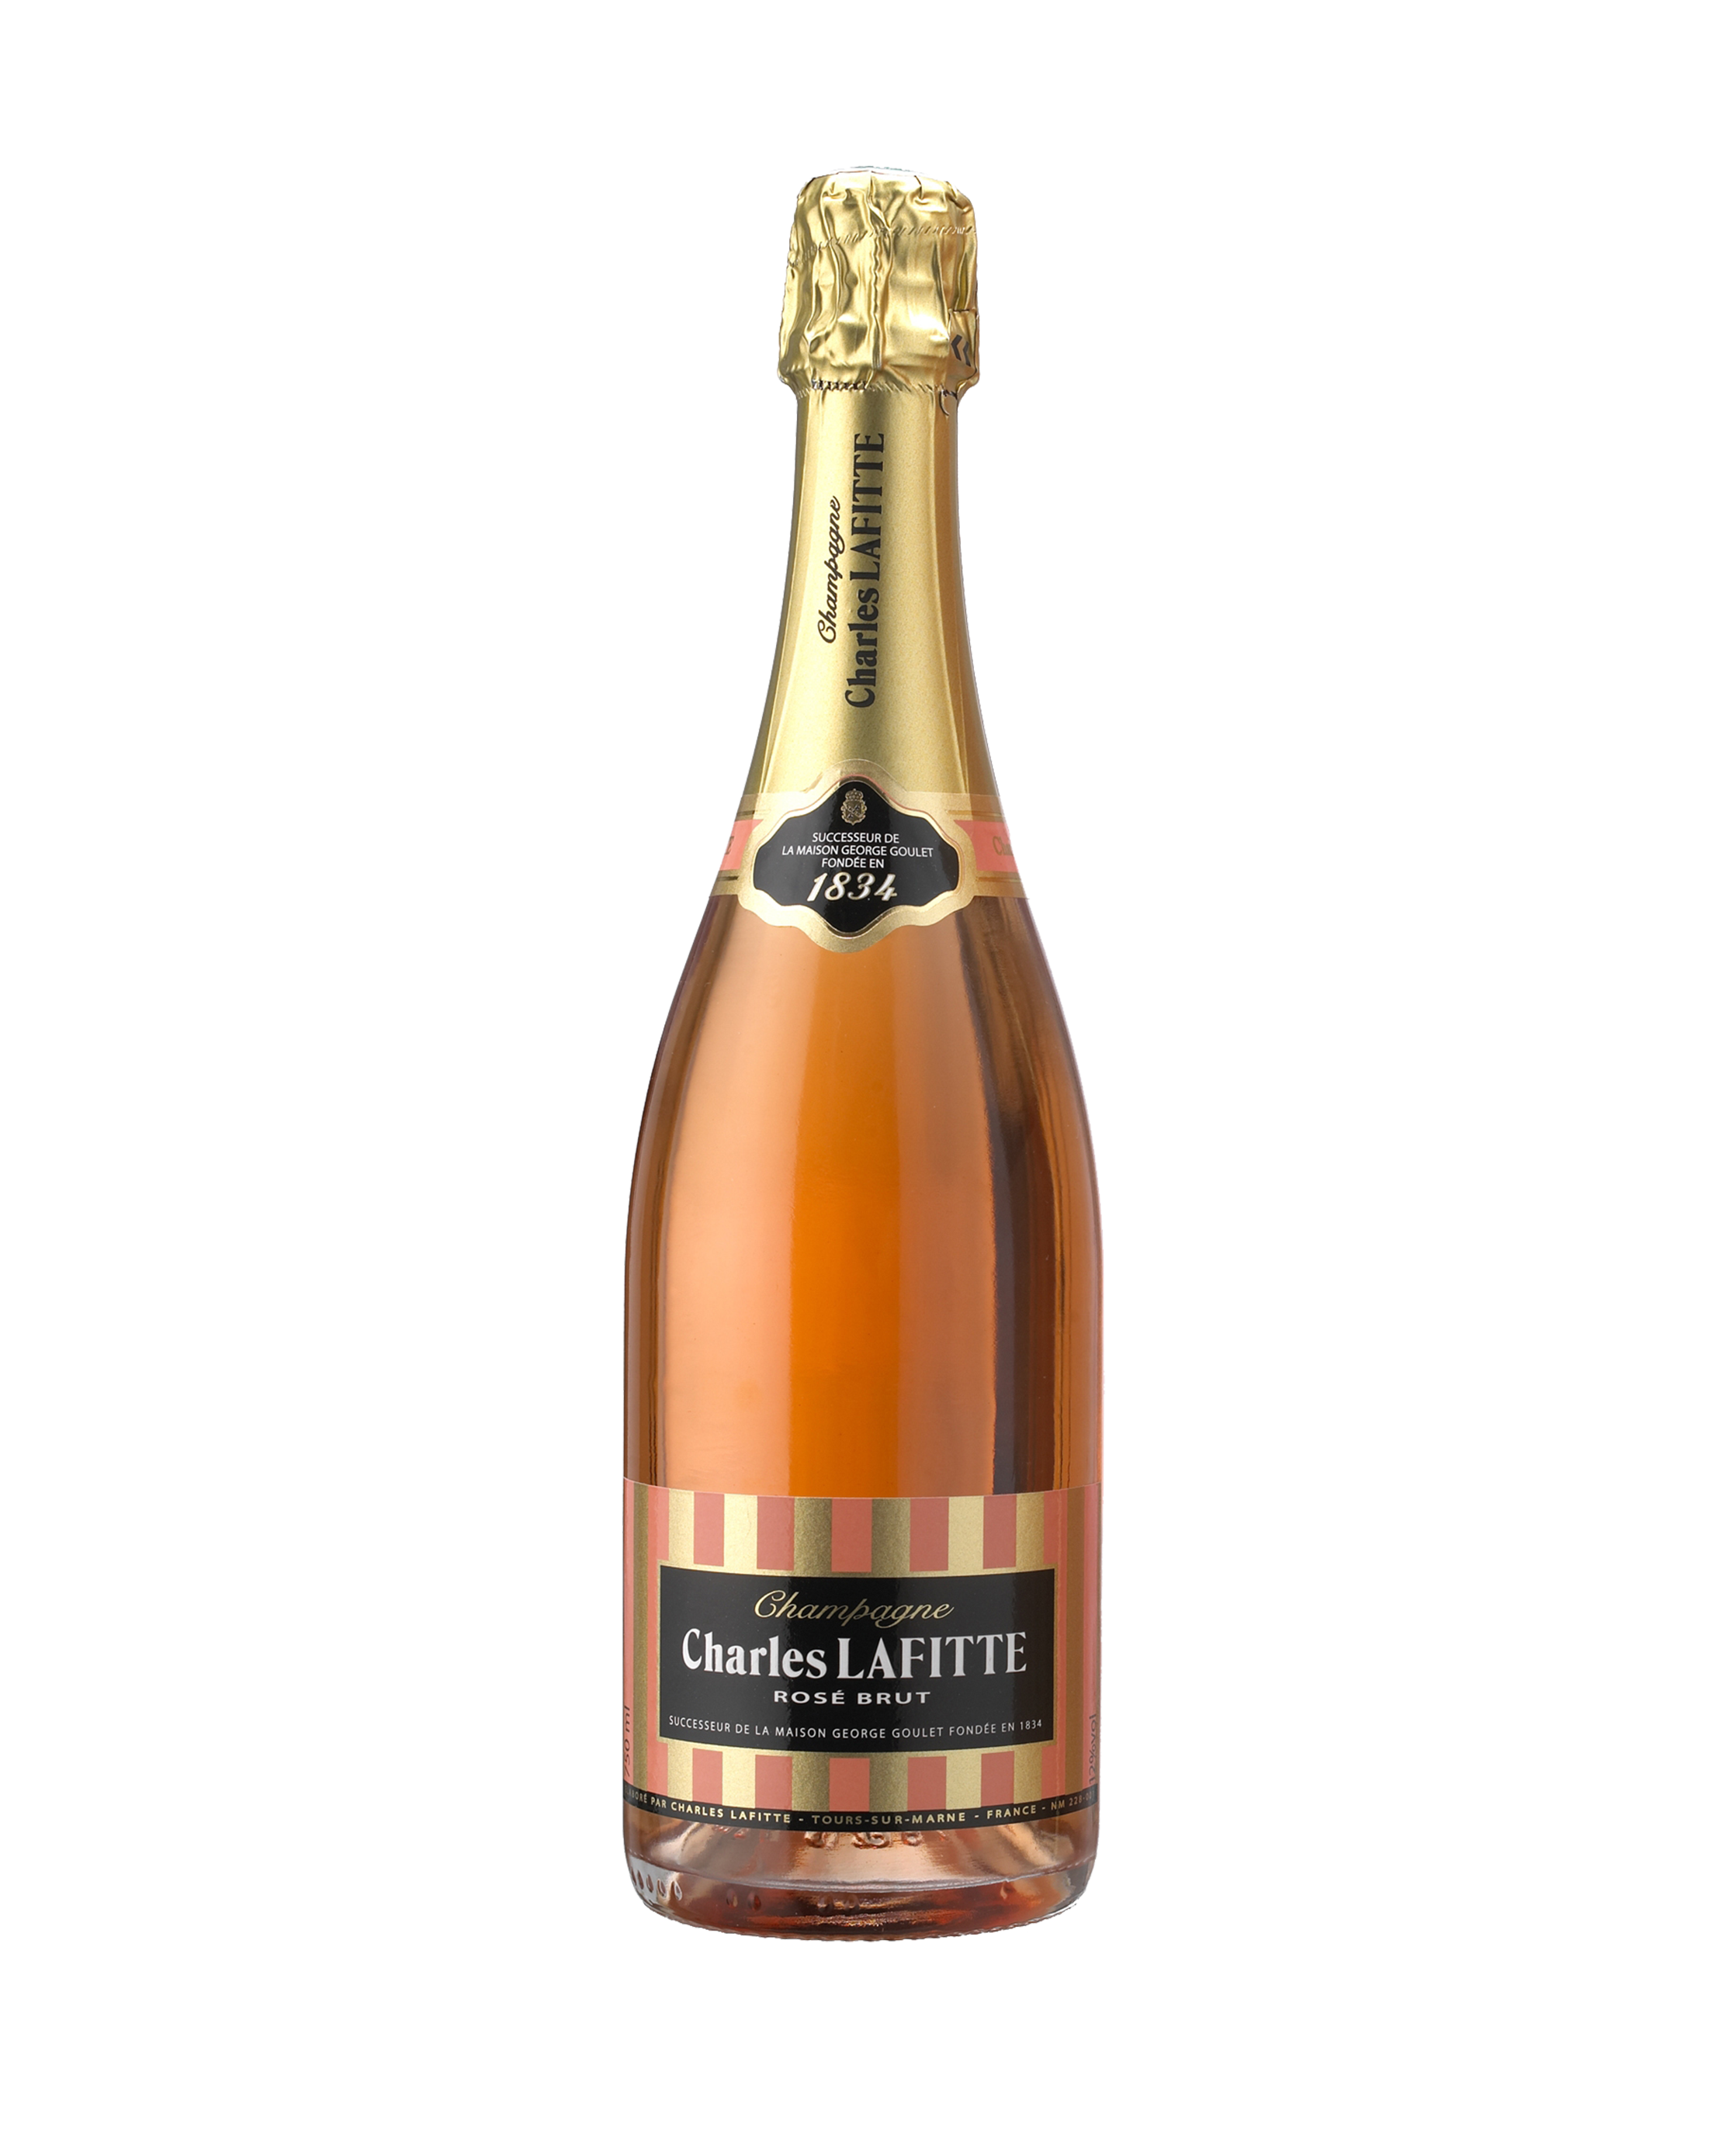 Charles Lafitte 1834 - Rosé - Champagne Charles Lafitte